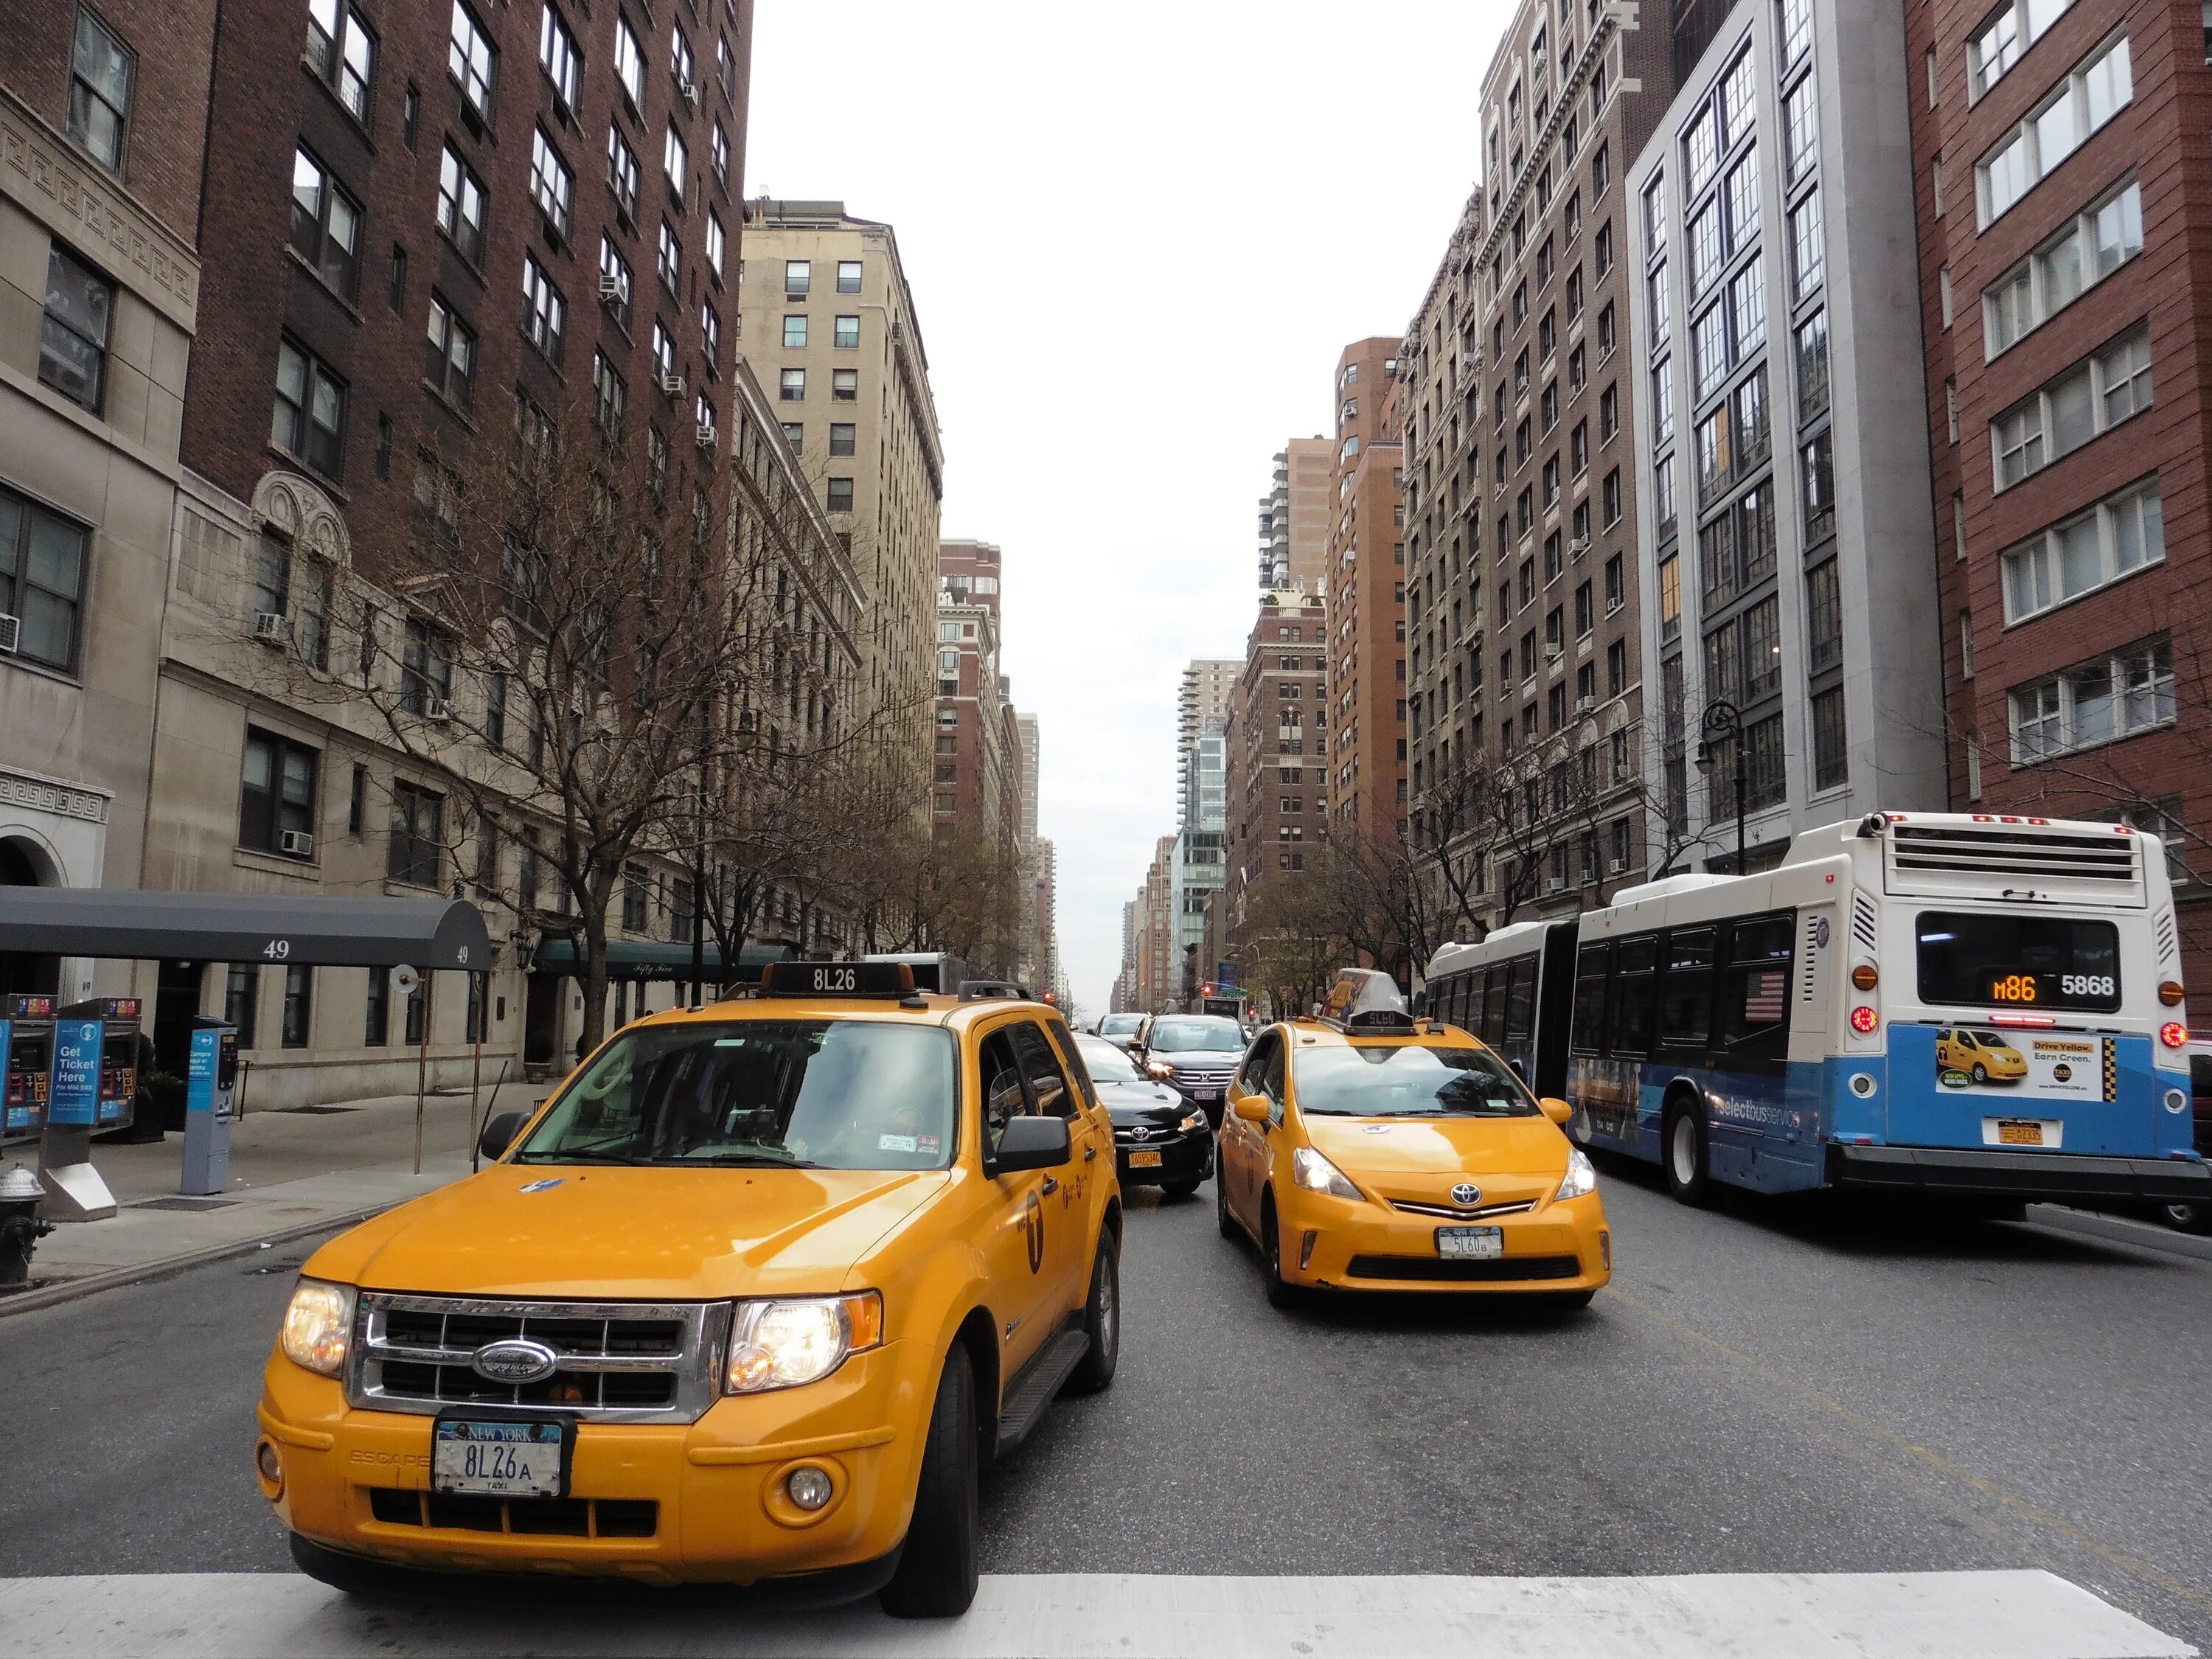 Нью Йорк Манхэттен такси. Нью-Йорк такси на улице. Нью Йорк контрасты. Машины на улицах города.